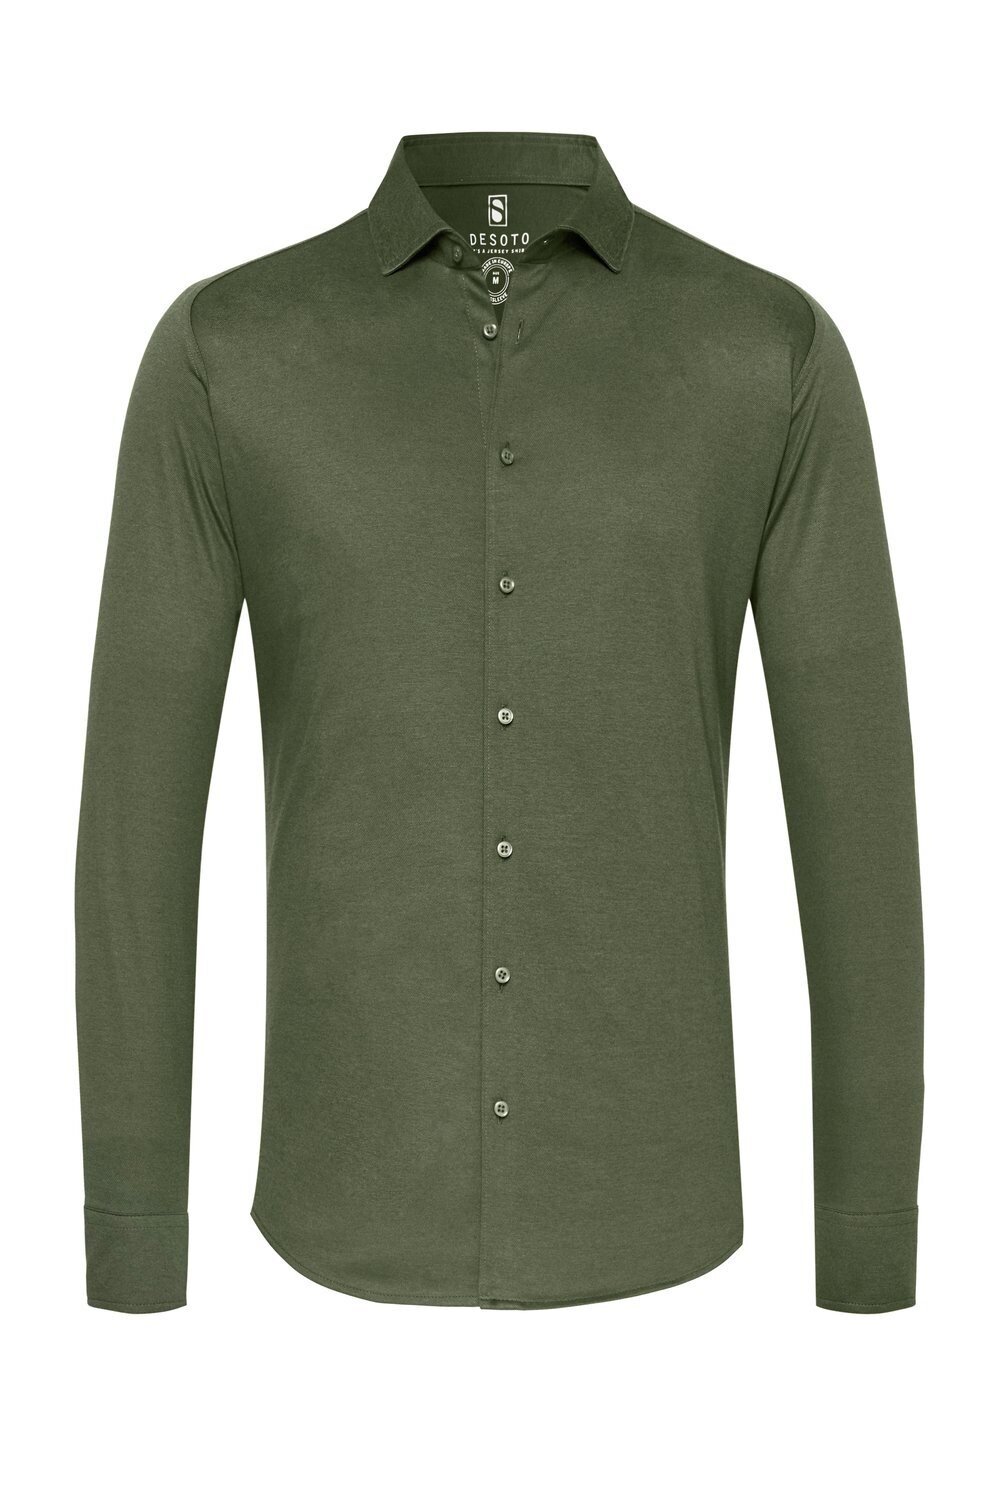 Desoto overhemd Kent 1/1, groen